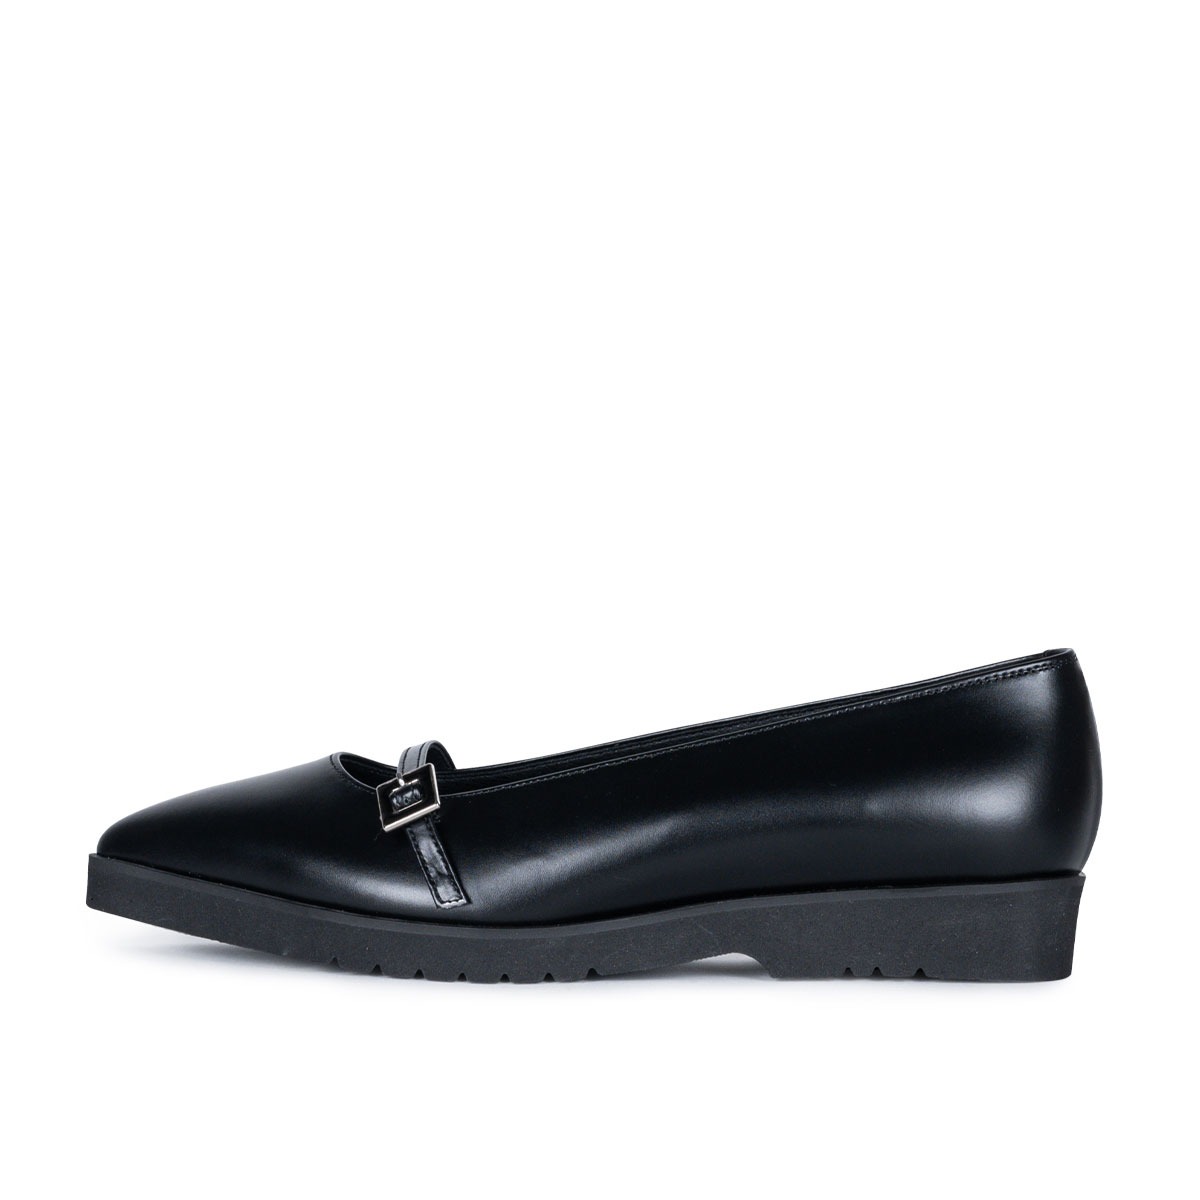 BELLA mary-jane flat shoes (Black)